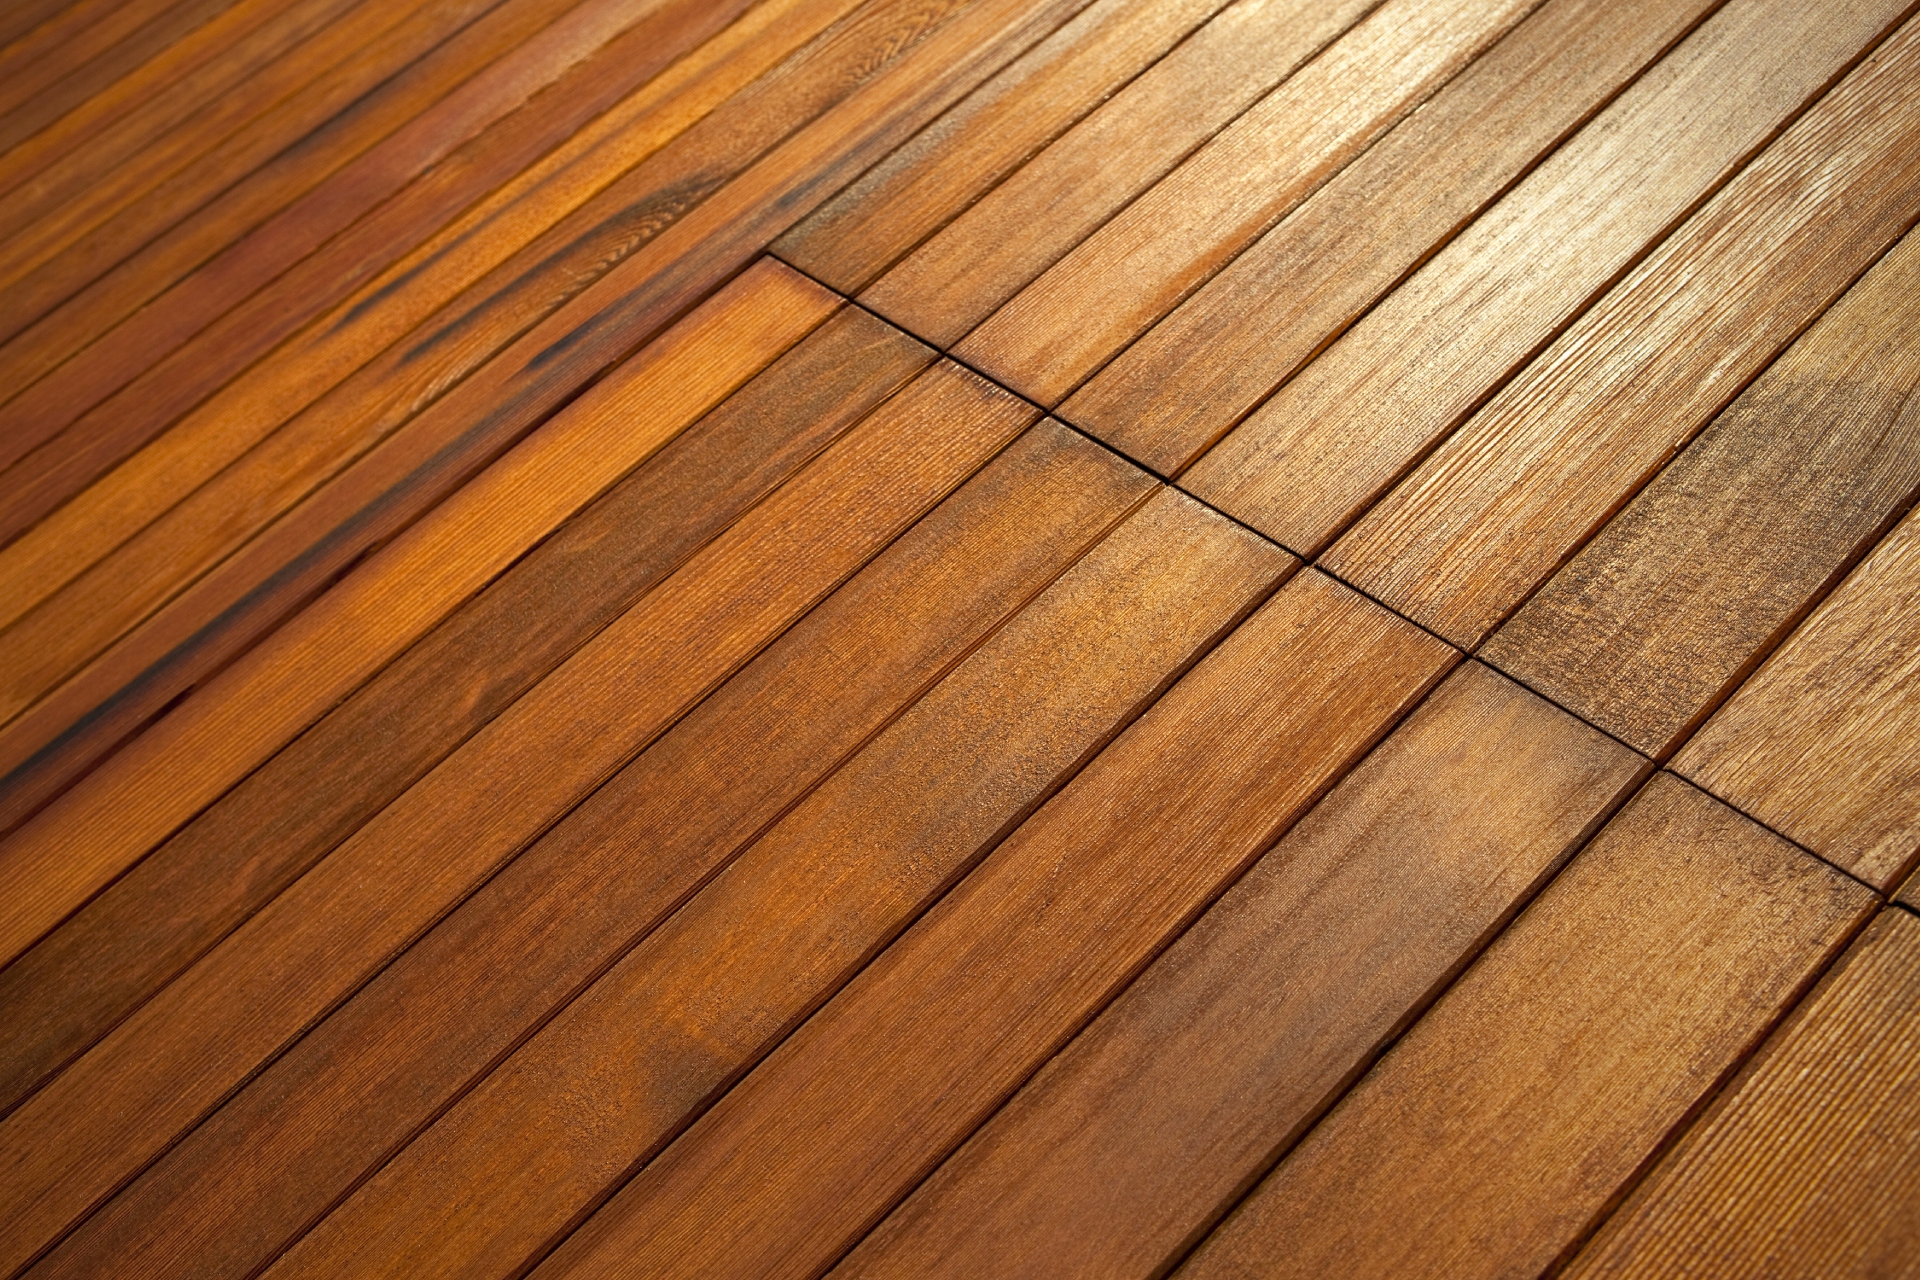 Durable and Stylish Engineered Hardwood Floors | Floor Floor We Restore, Houston, TX